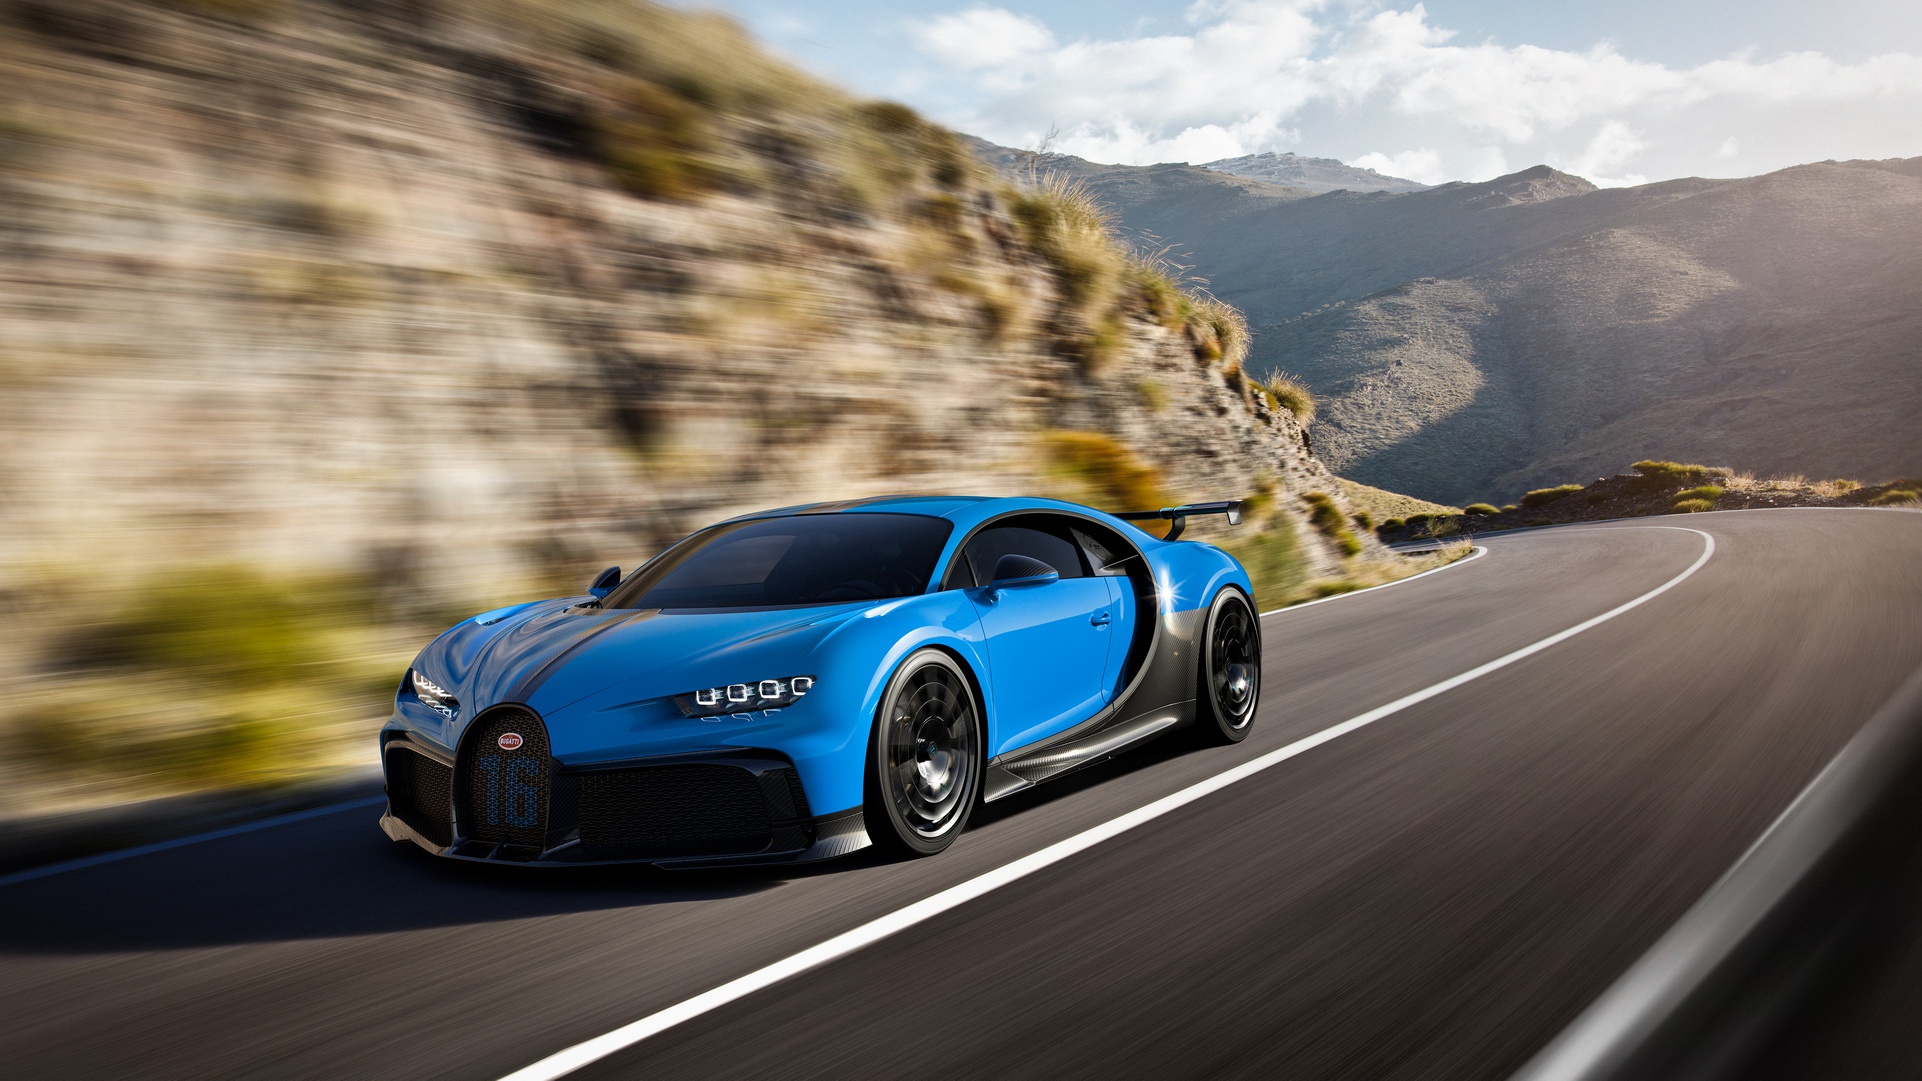 Bugatti Chiron phien ban moi ra mat - sieu xe gia 3,55 trieu USD hinh anh 2 A1.jpg